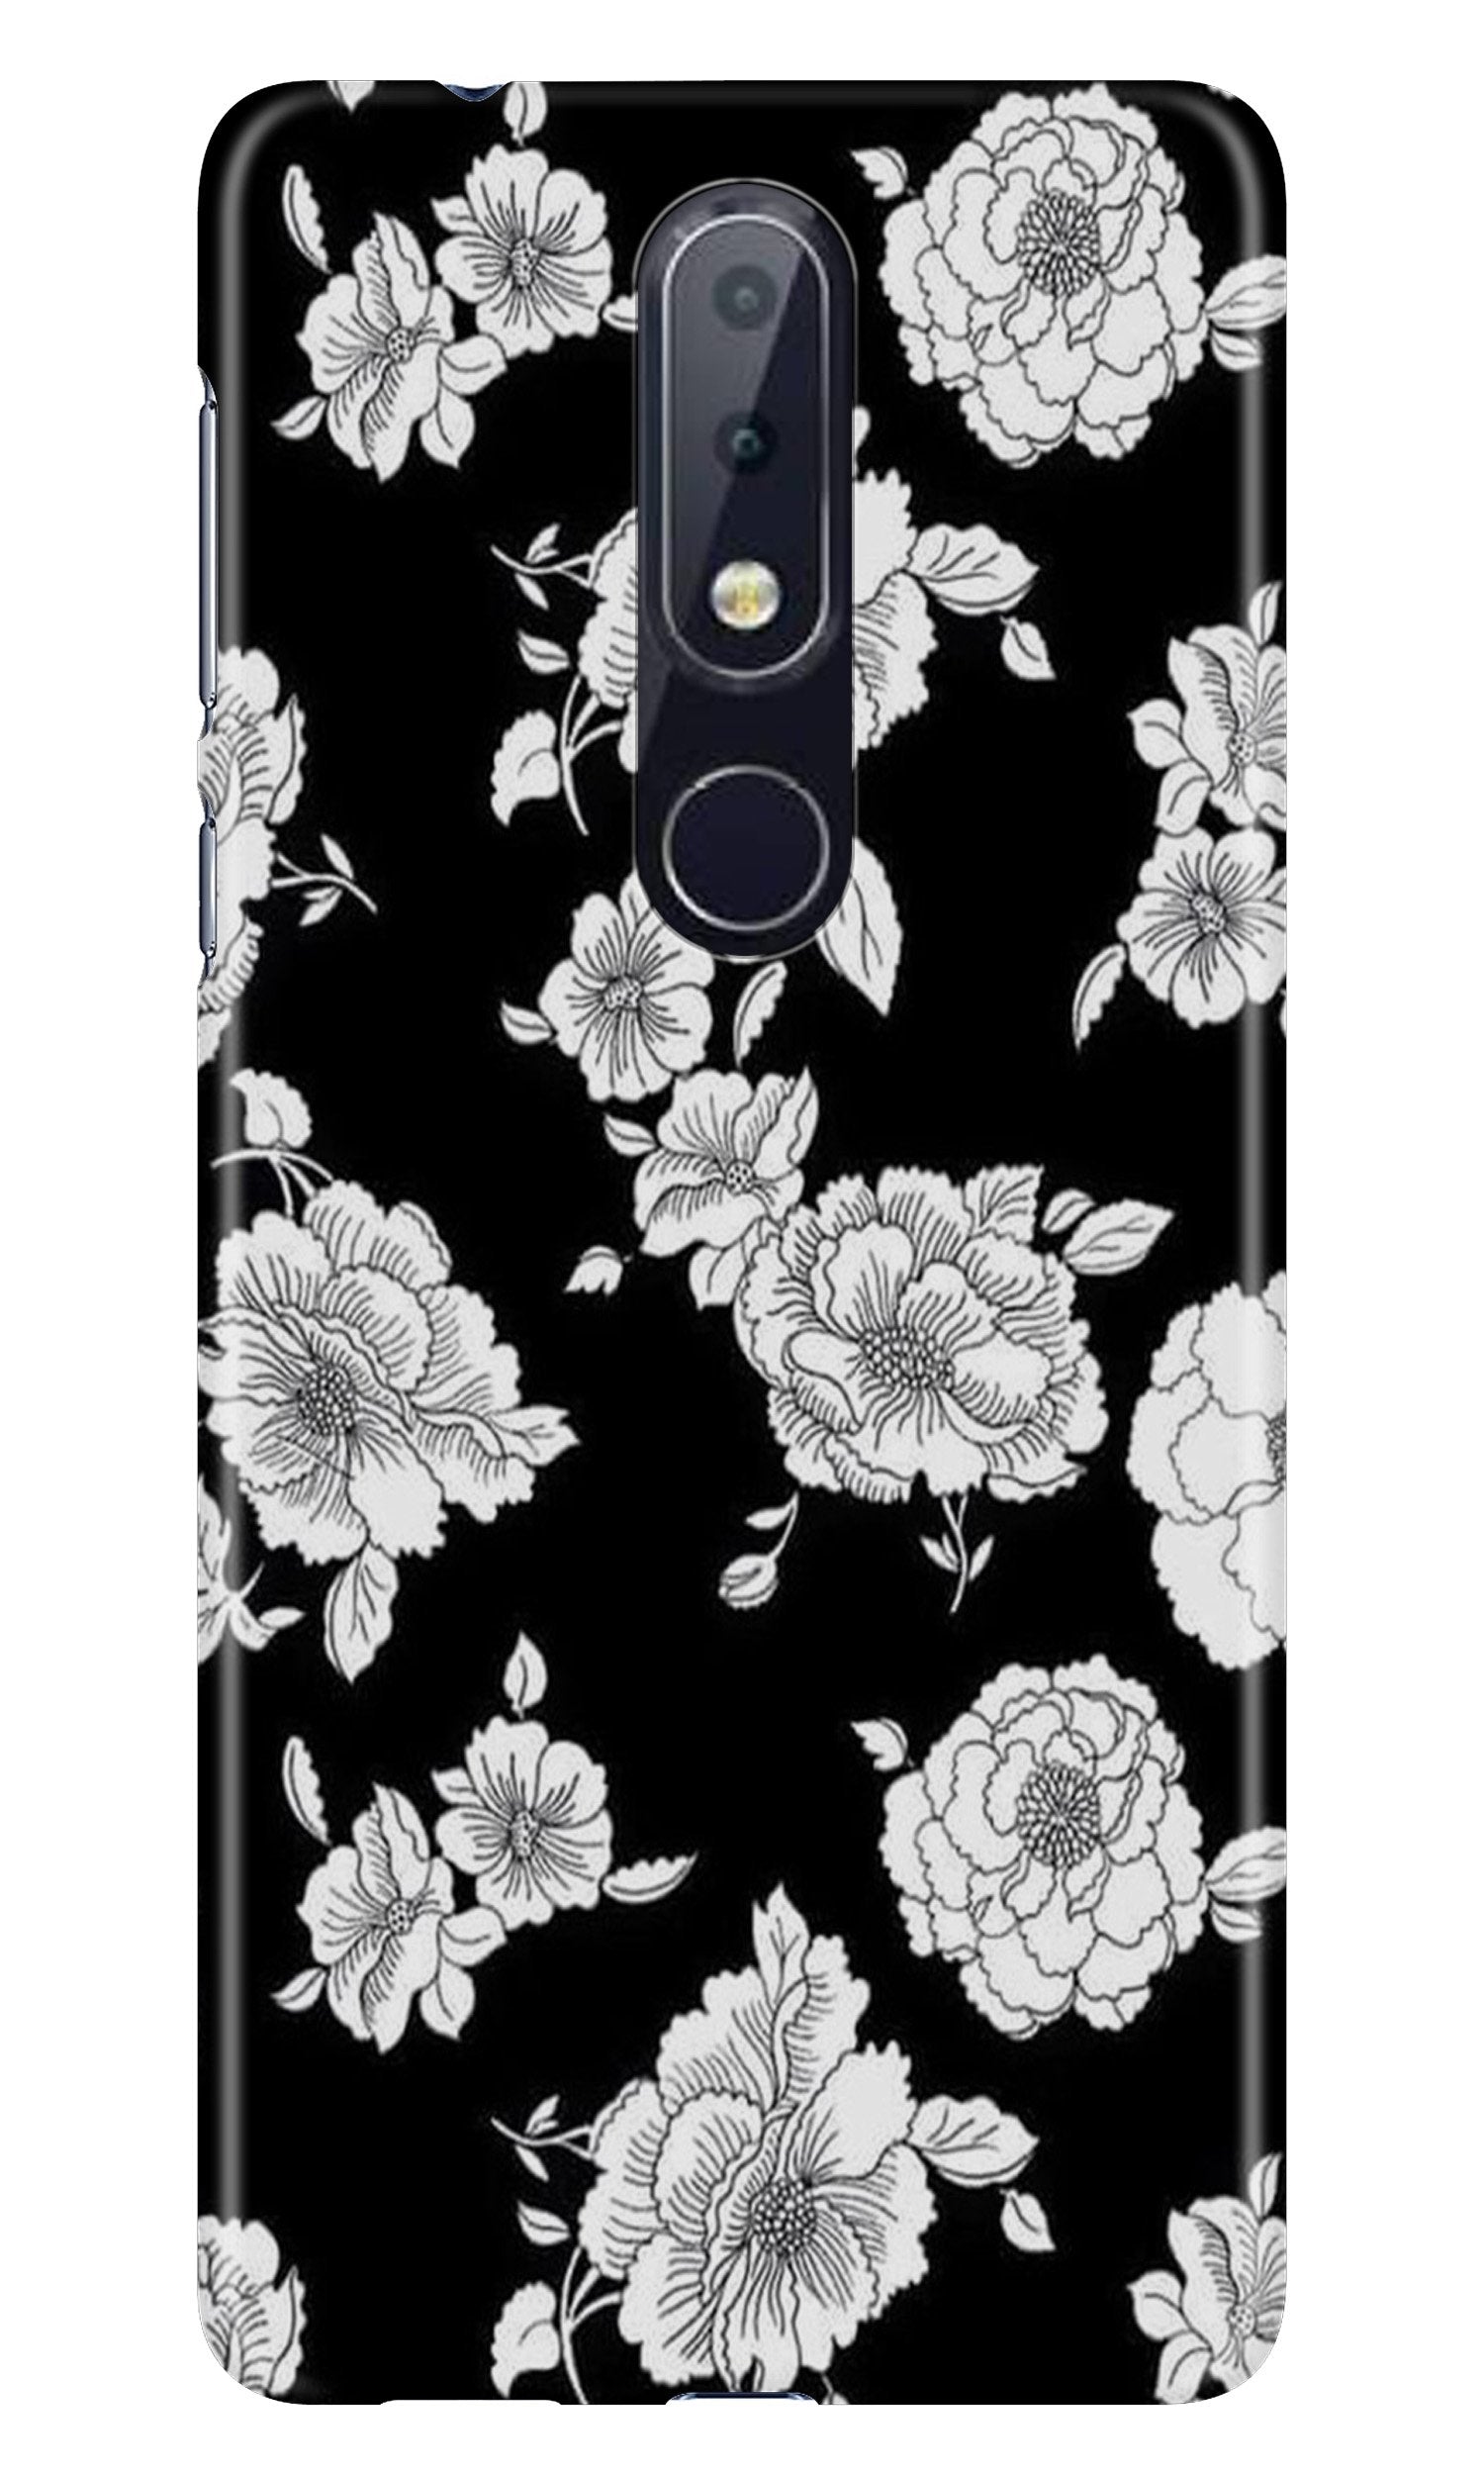 White flowers Black Background Case for Nokia 7.1